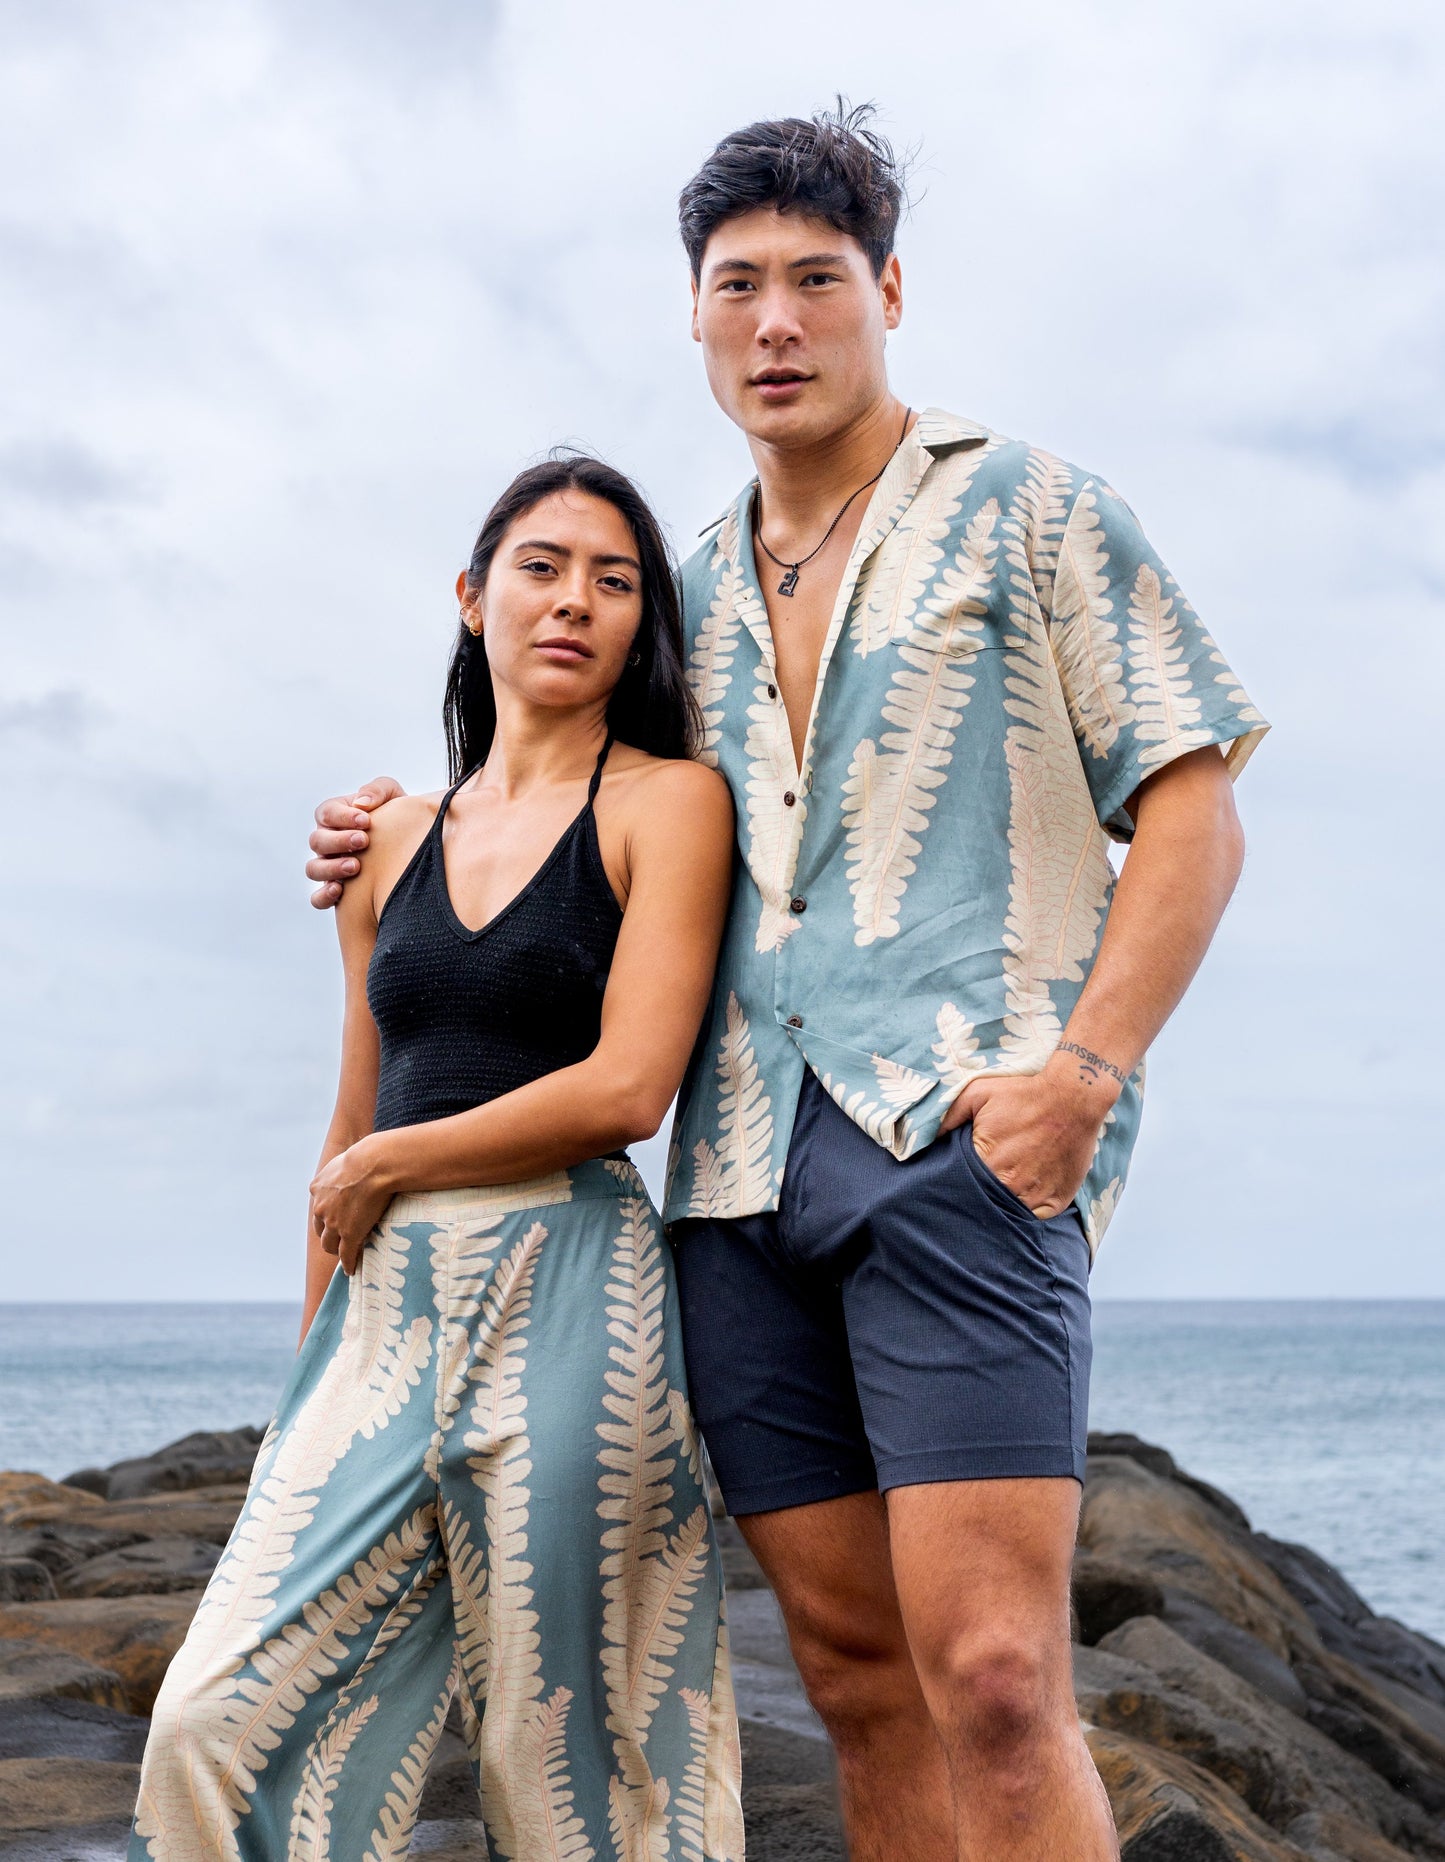 Kupukupu Olivine Vintage Cut Aloha Shirt